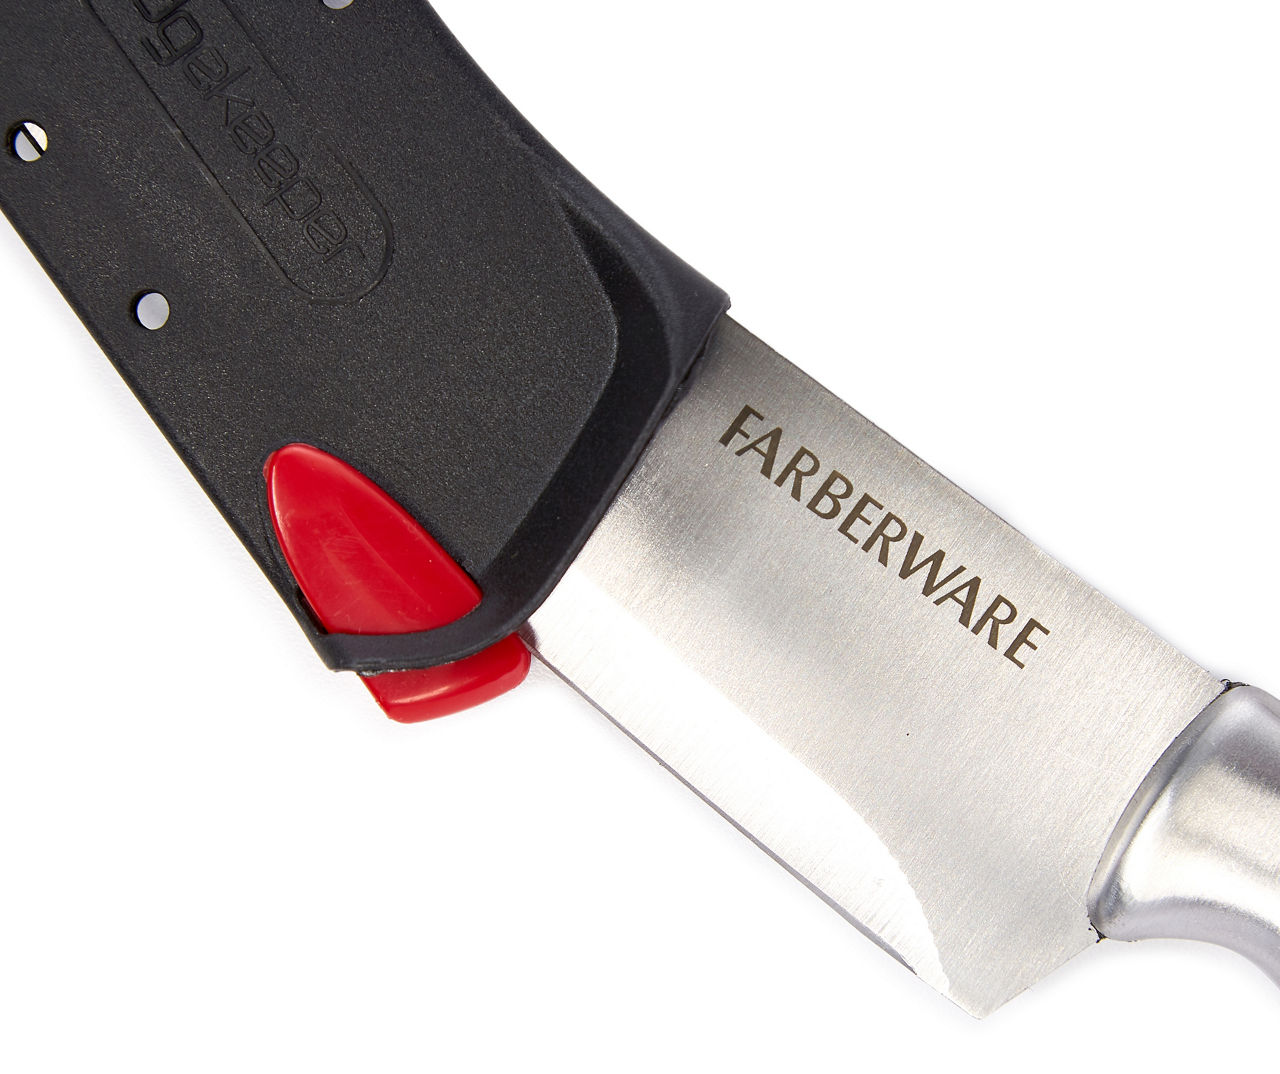 Farberware Edgekeeper Tabletop Knife Sharpener